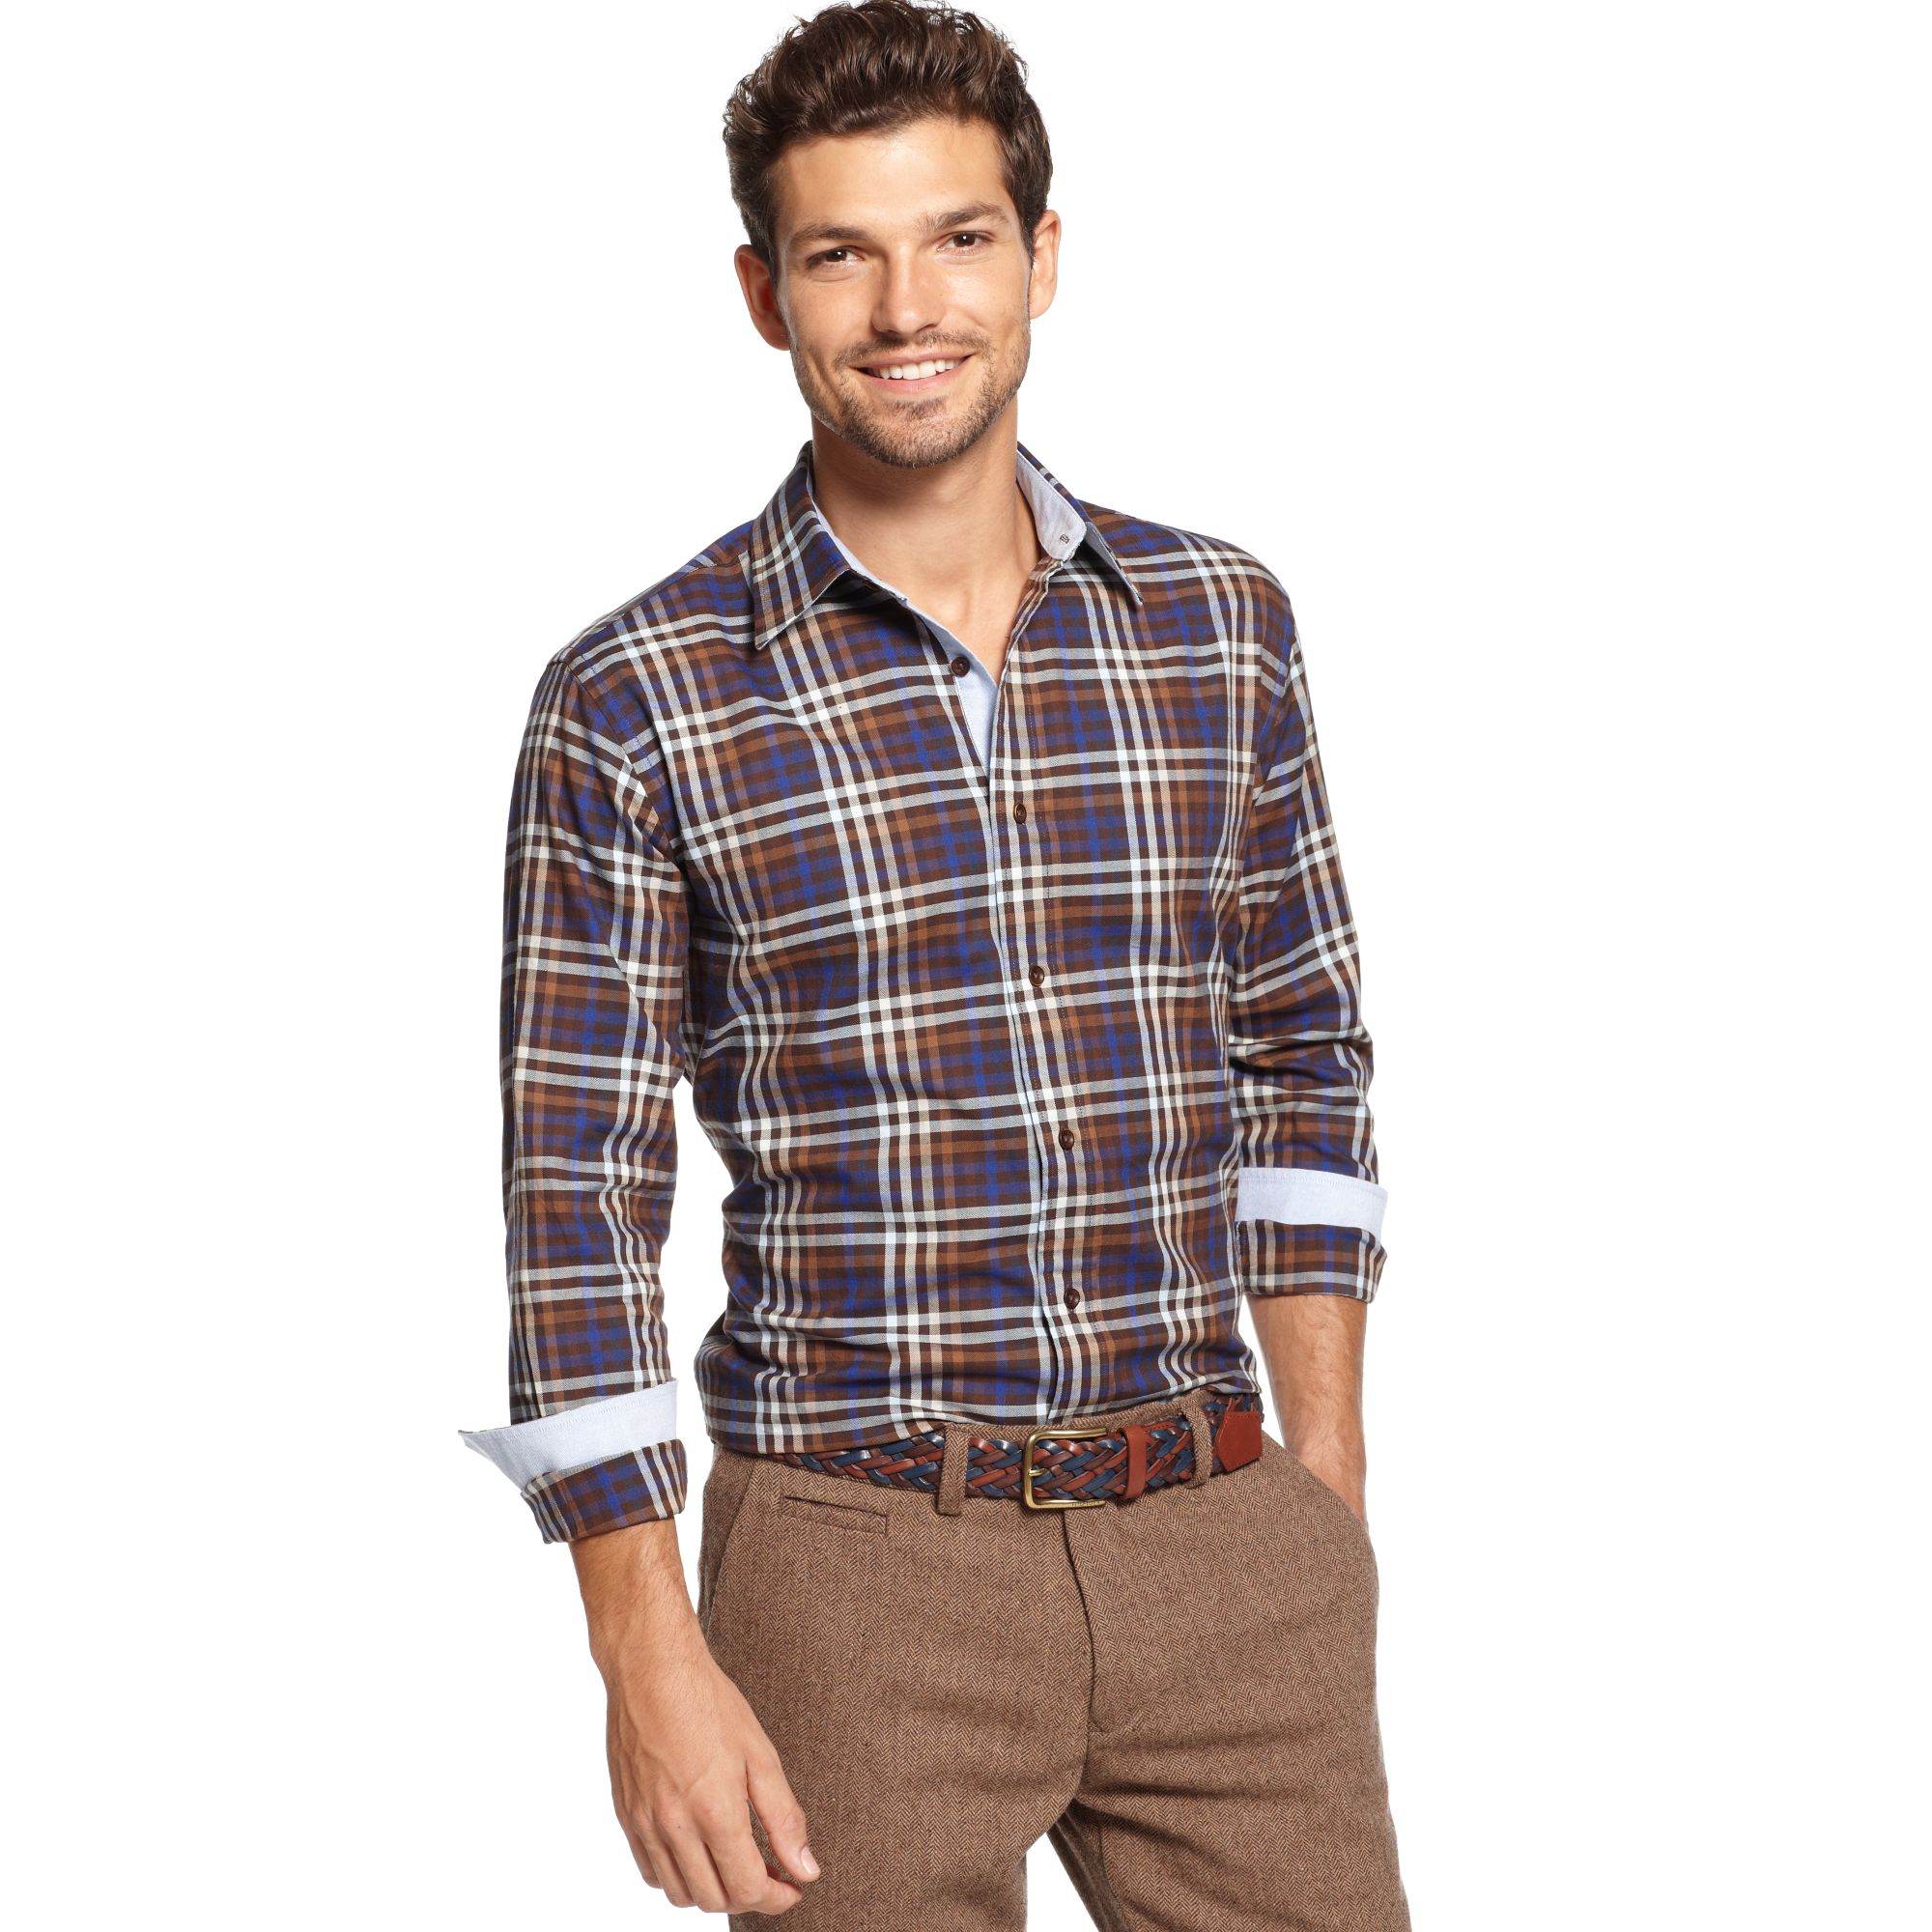 Tommy Hilfiger Long Sleeve Grant Shirt in Chestnut (Brown) for Men - Lyst